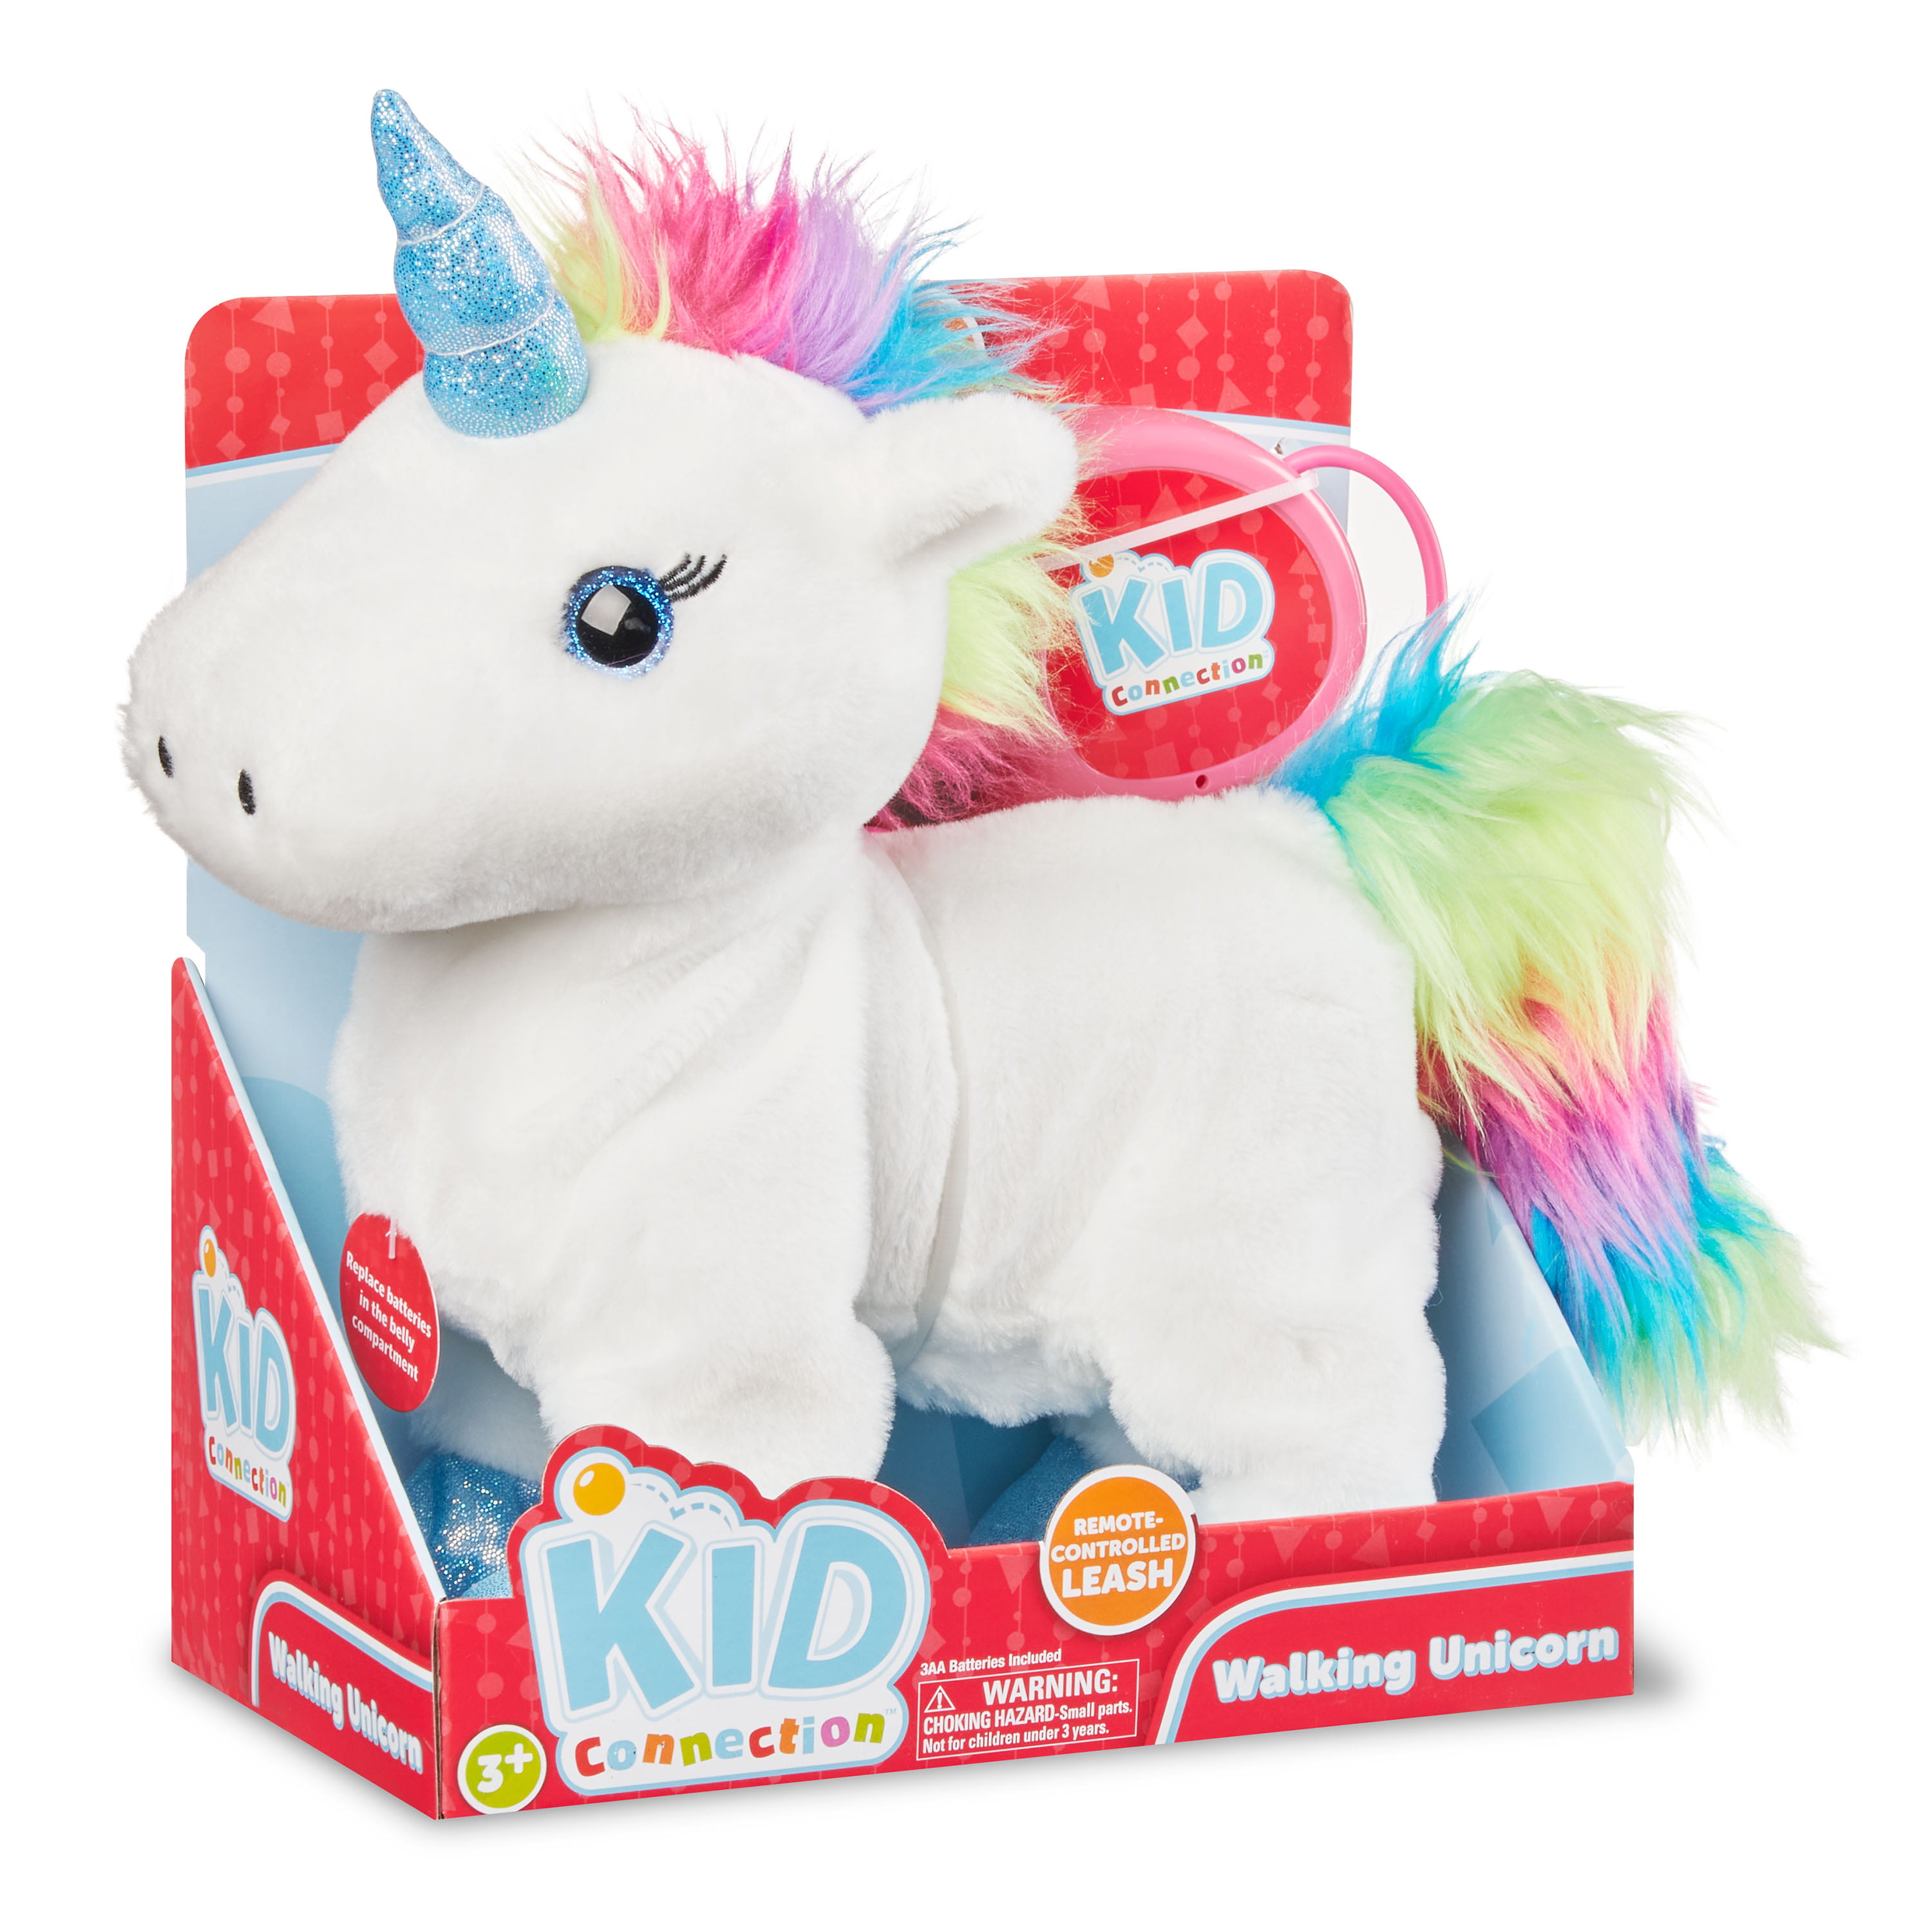 walking unicorn toy kid connection